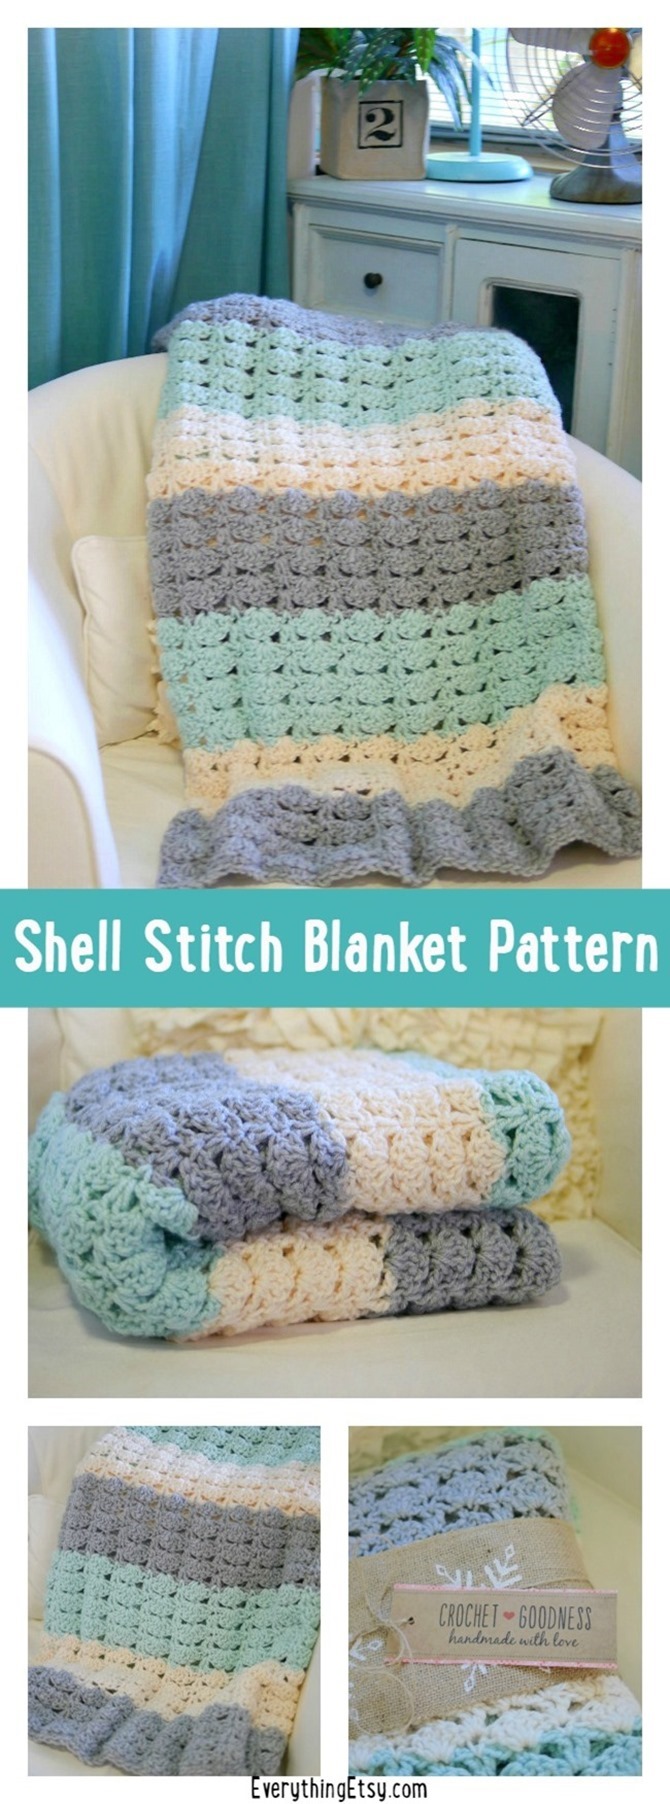 free-crochet-blanket-pattern-shell-stitch